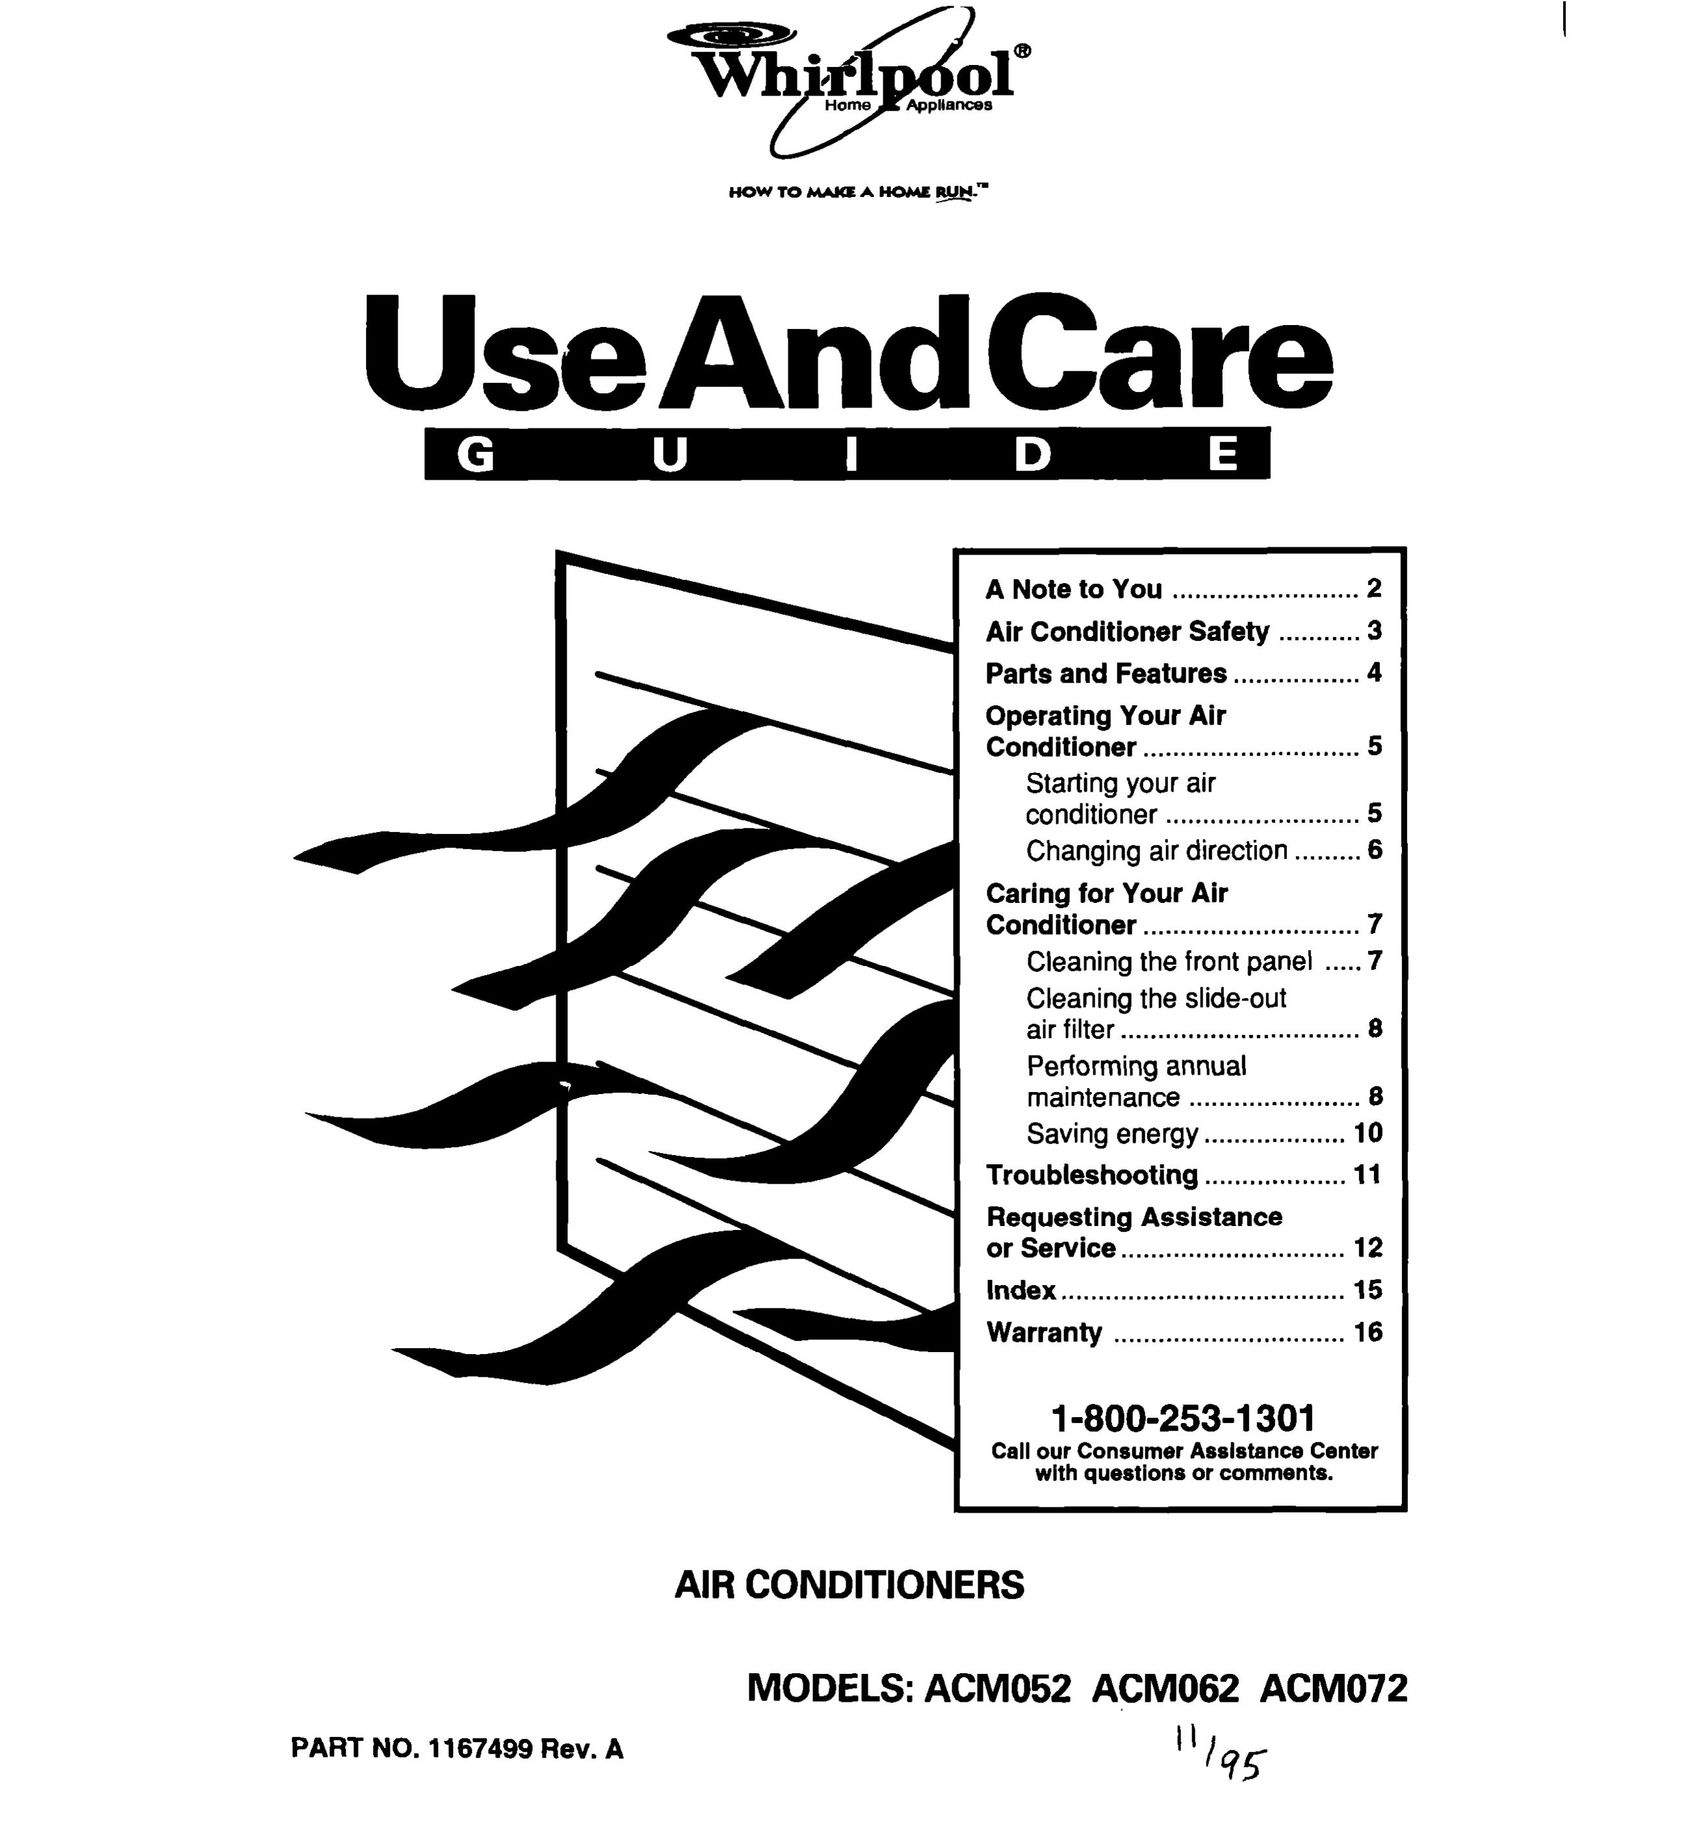 Whirlpool ACM072 Air Conditioner User Manual